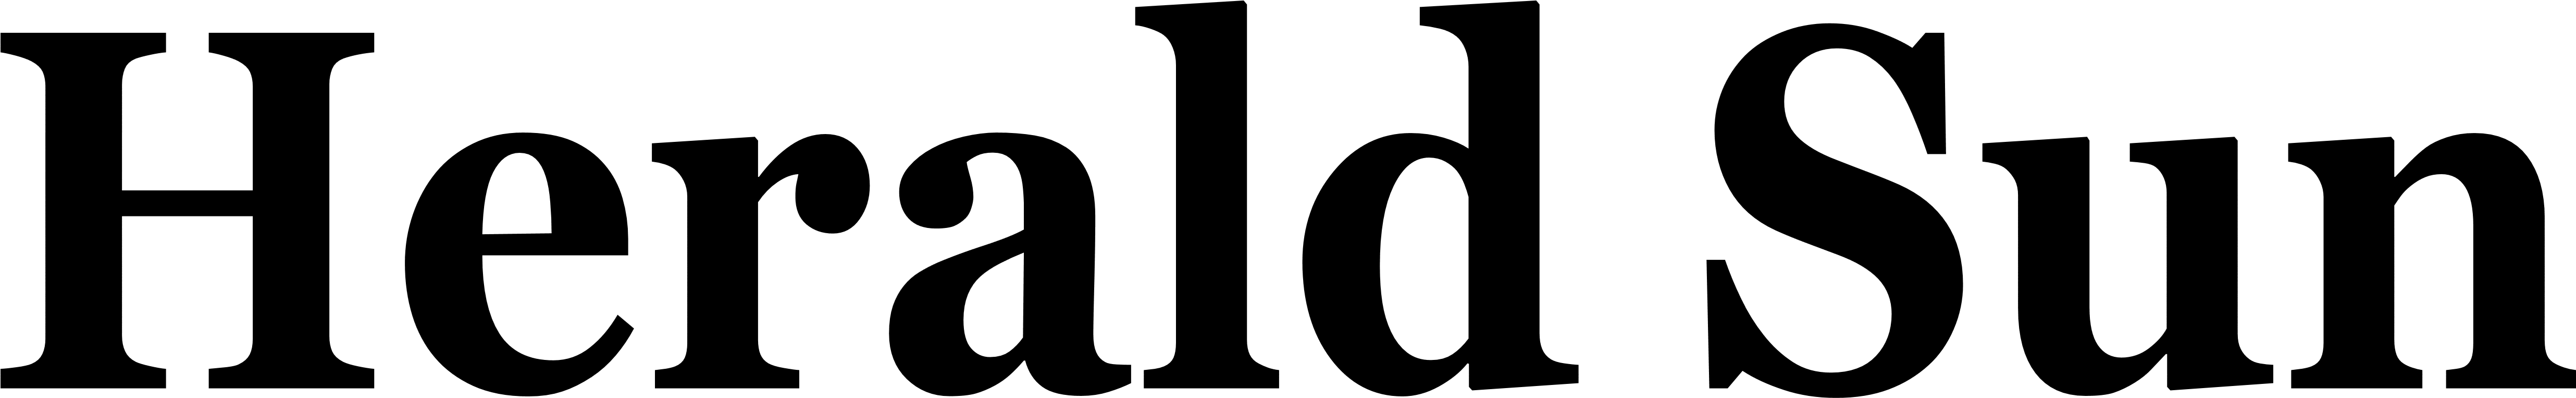 Herald Sun Logo, Logotype - Herald Sun Australia Logo (5000x812)